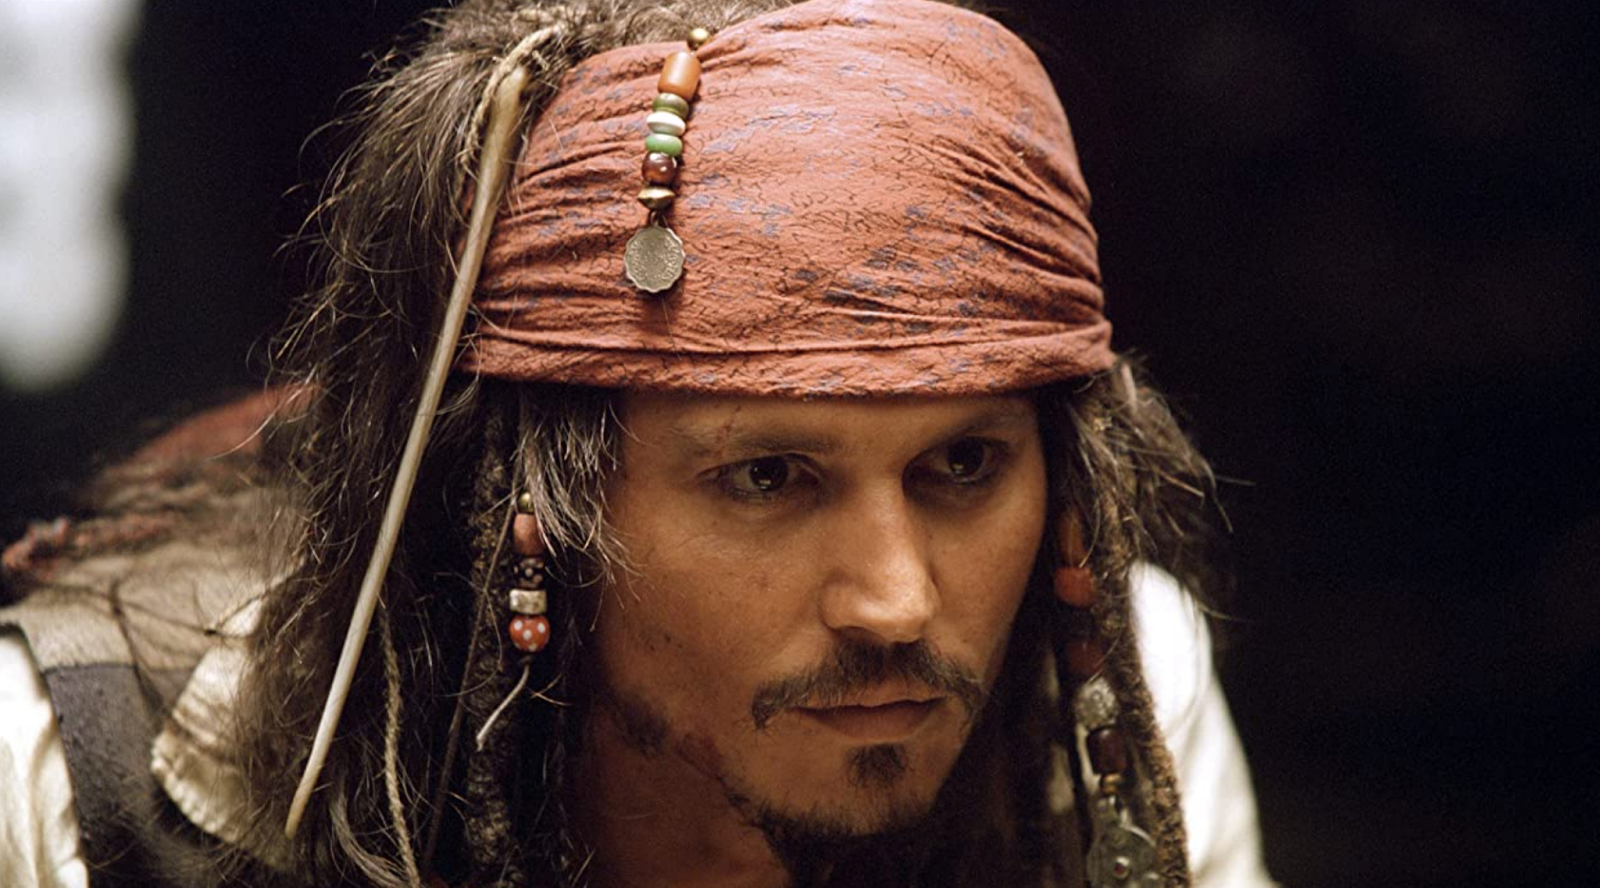 Where Was Pirates of the Caribbean Filmed? Johnny Depp as Captain Jack Sparrow